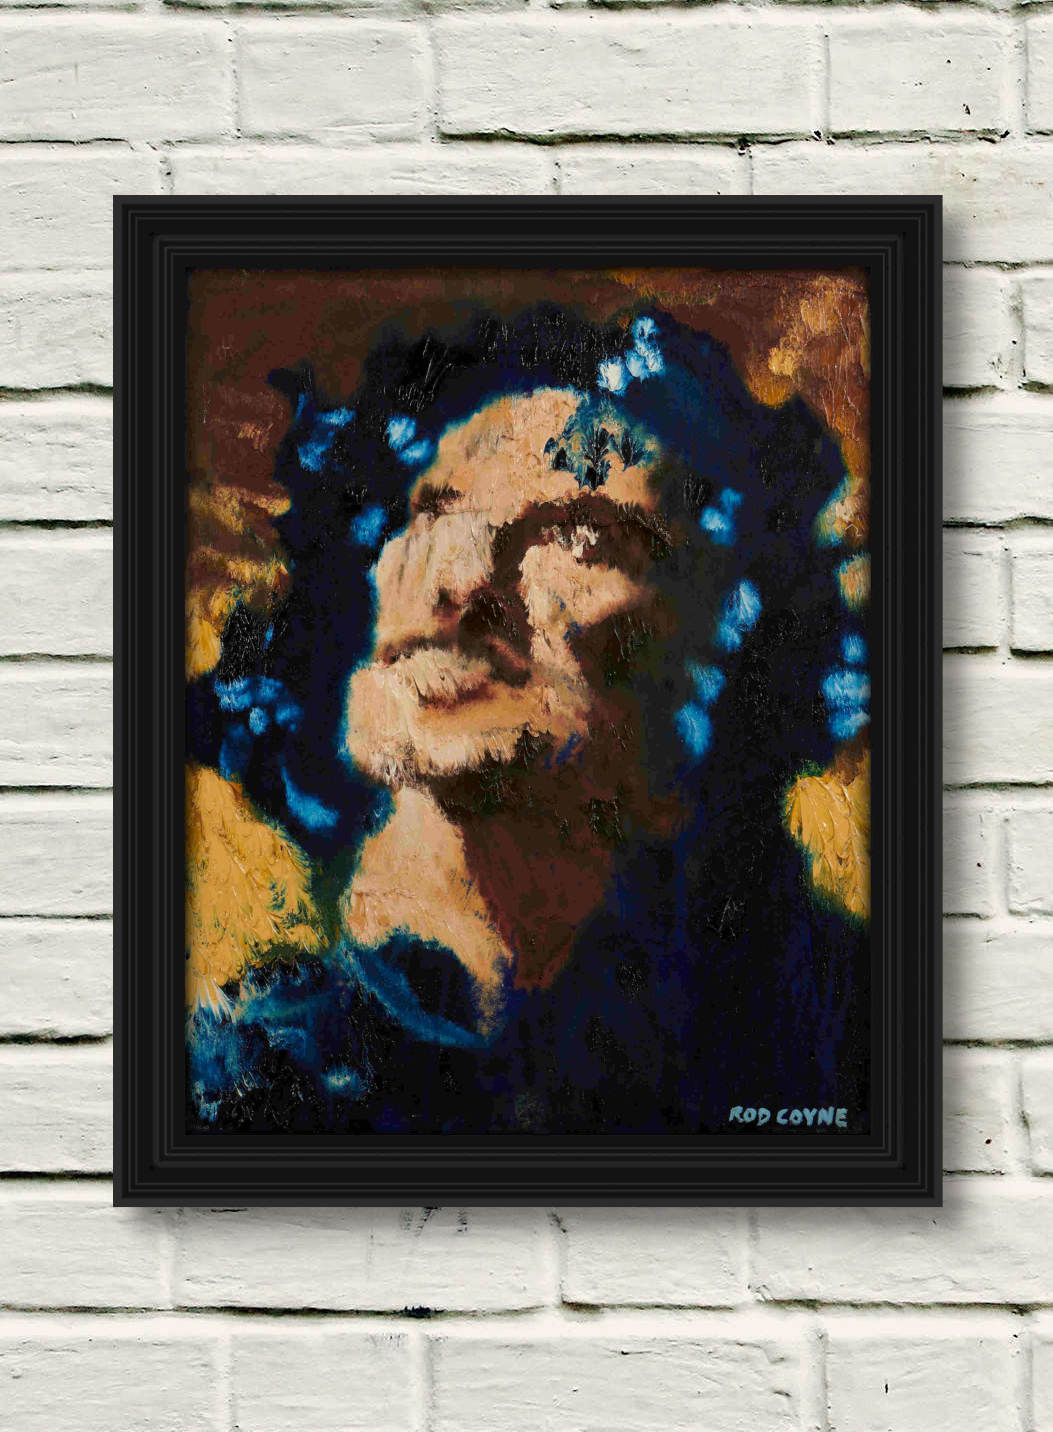 artist rod coyne's portrait "Angel Gabriel" is shown here on a white brick wall in a black frame.